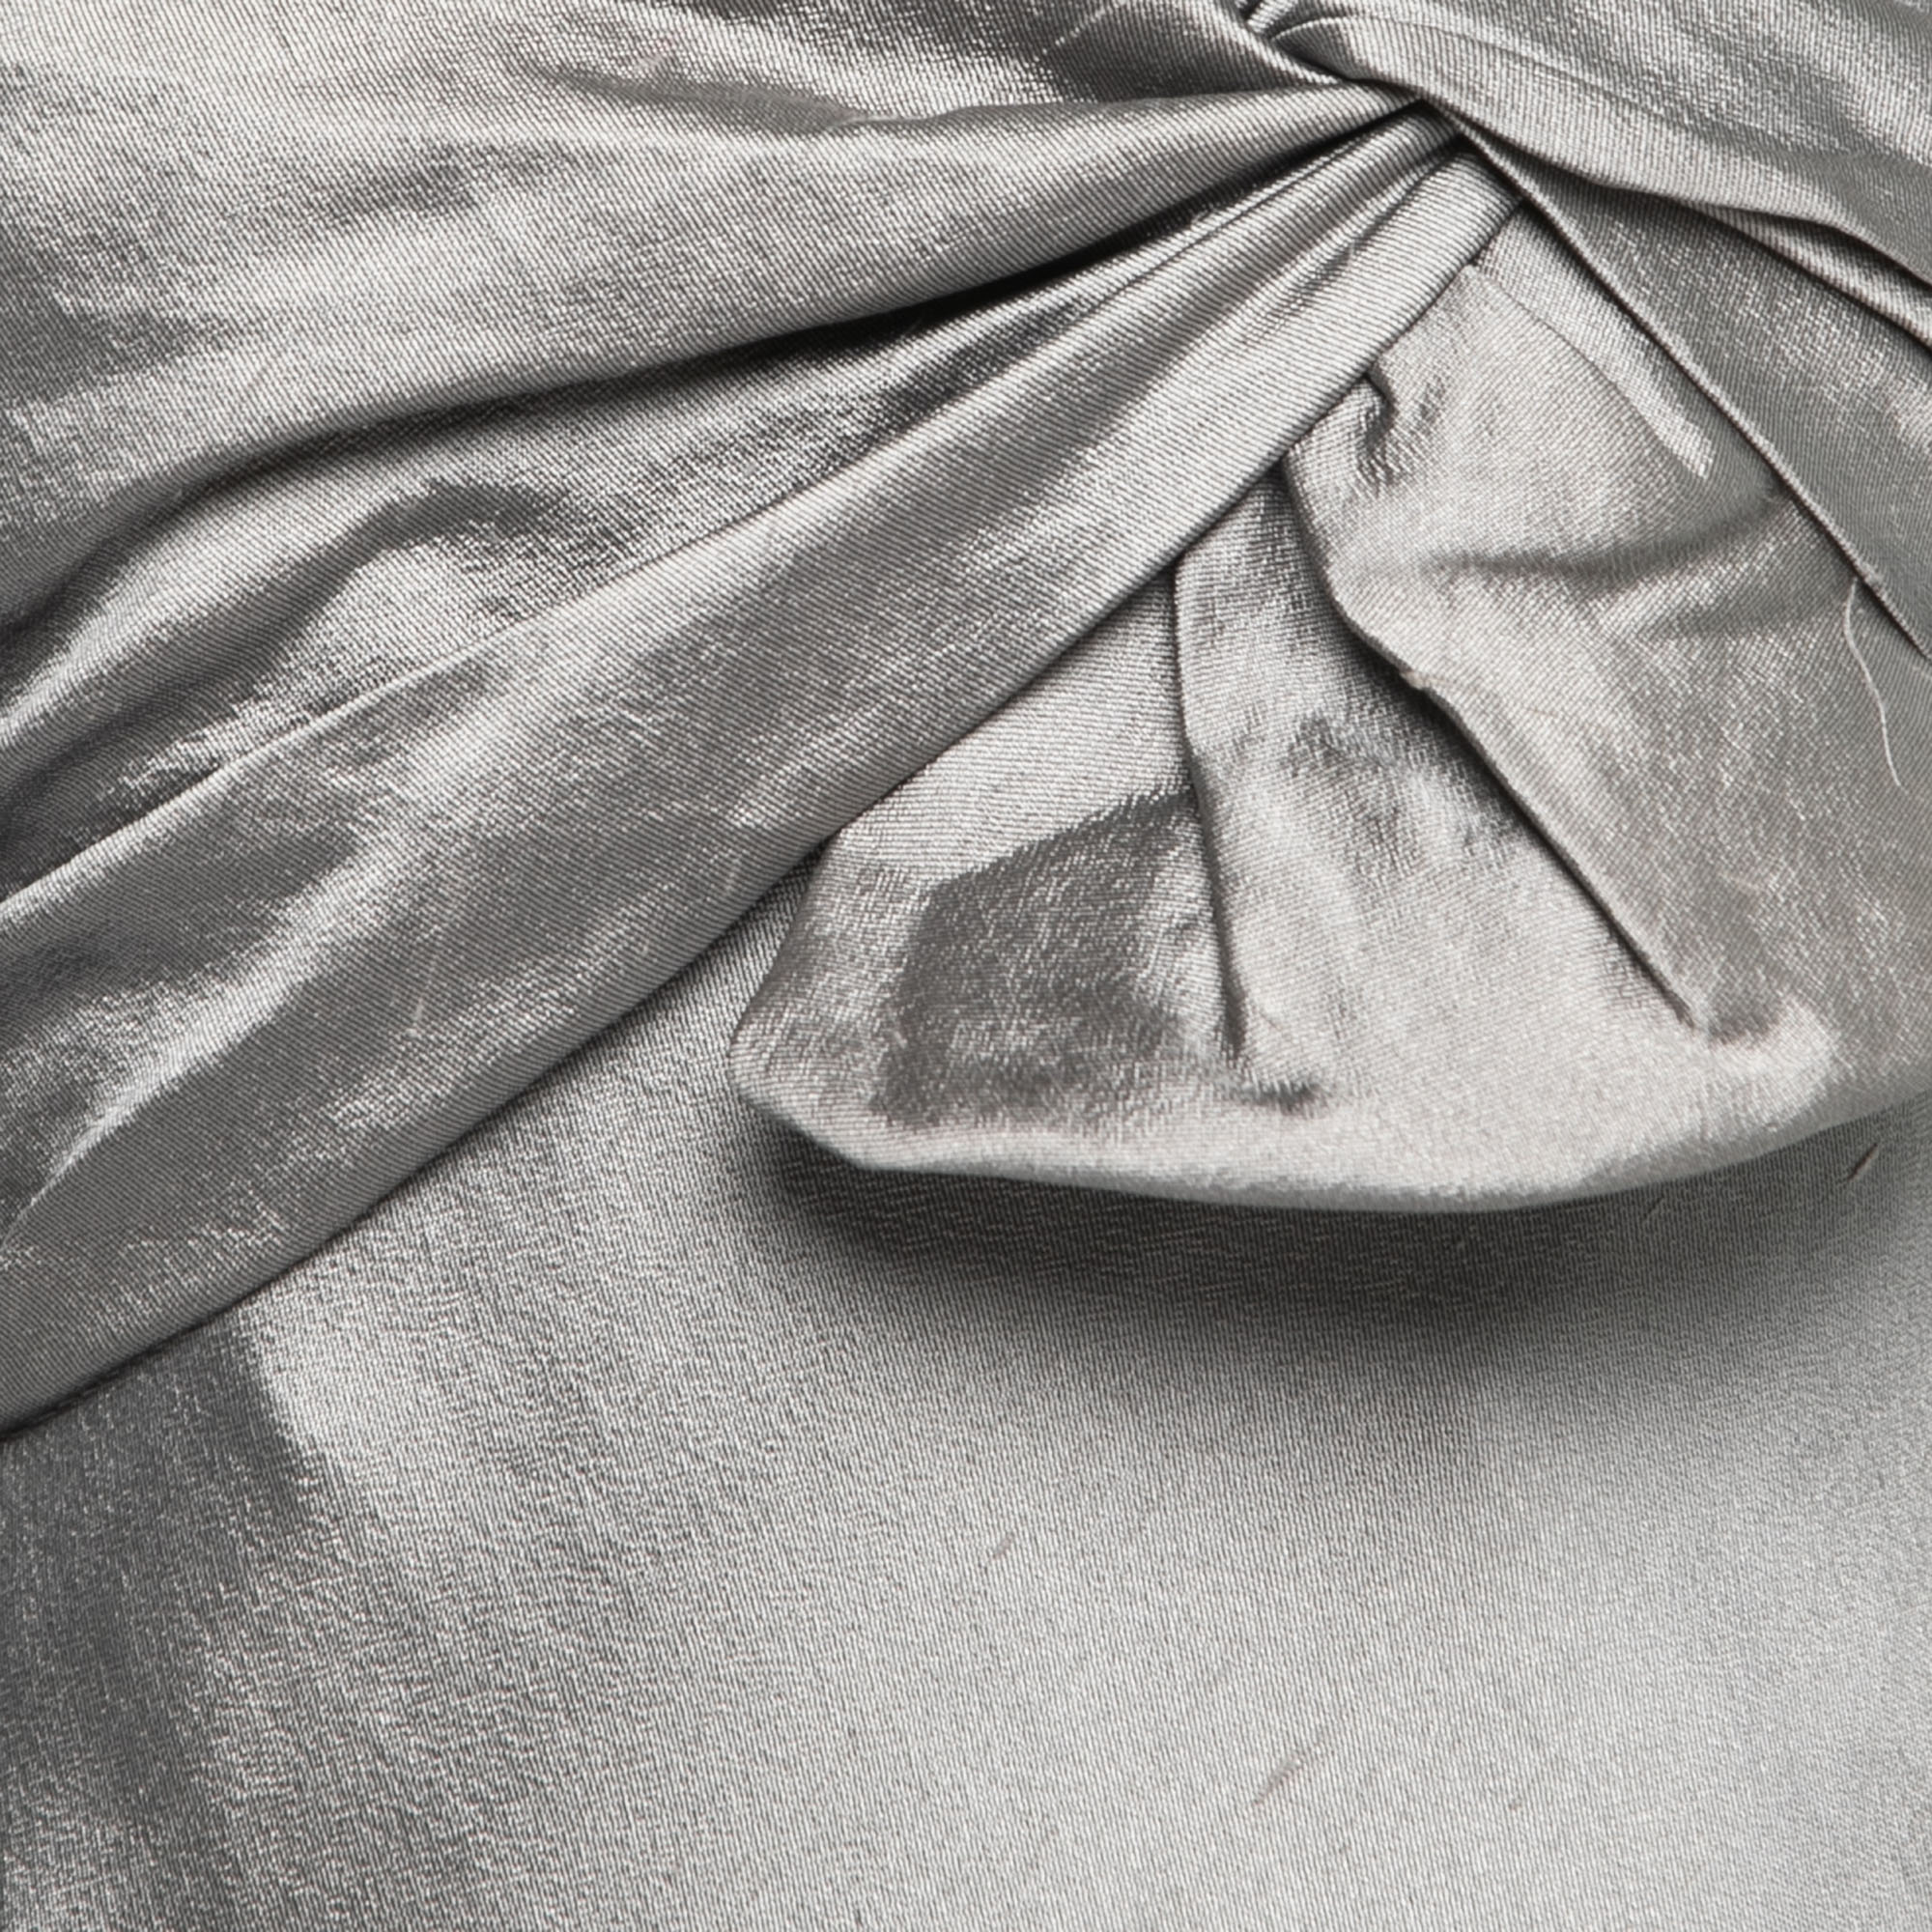 J Mendel Grey Silk Blend Strapless Front Bow Detail Gown L